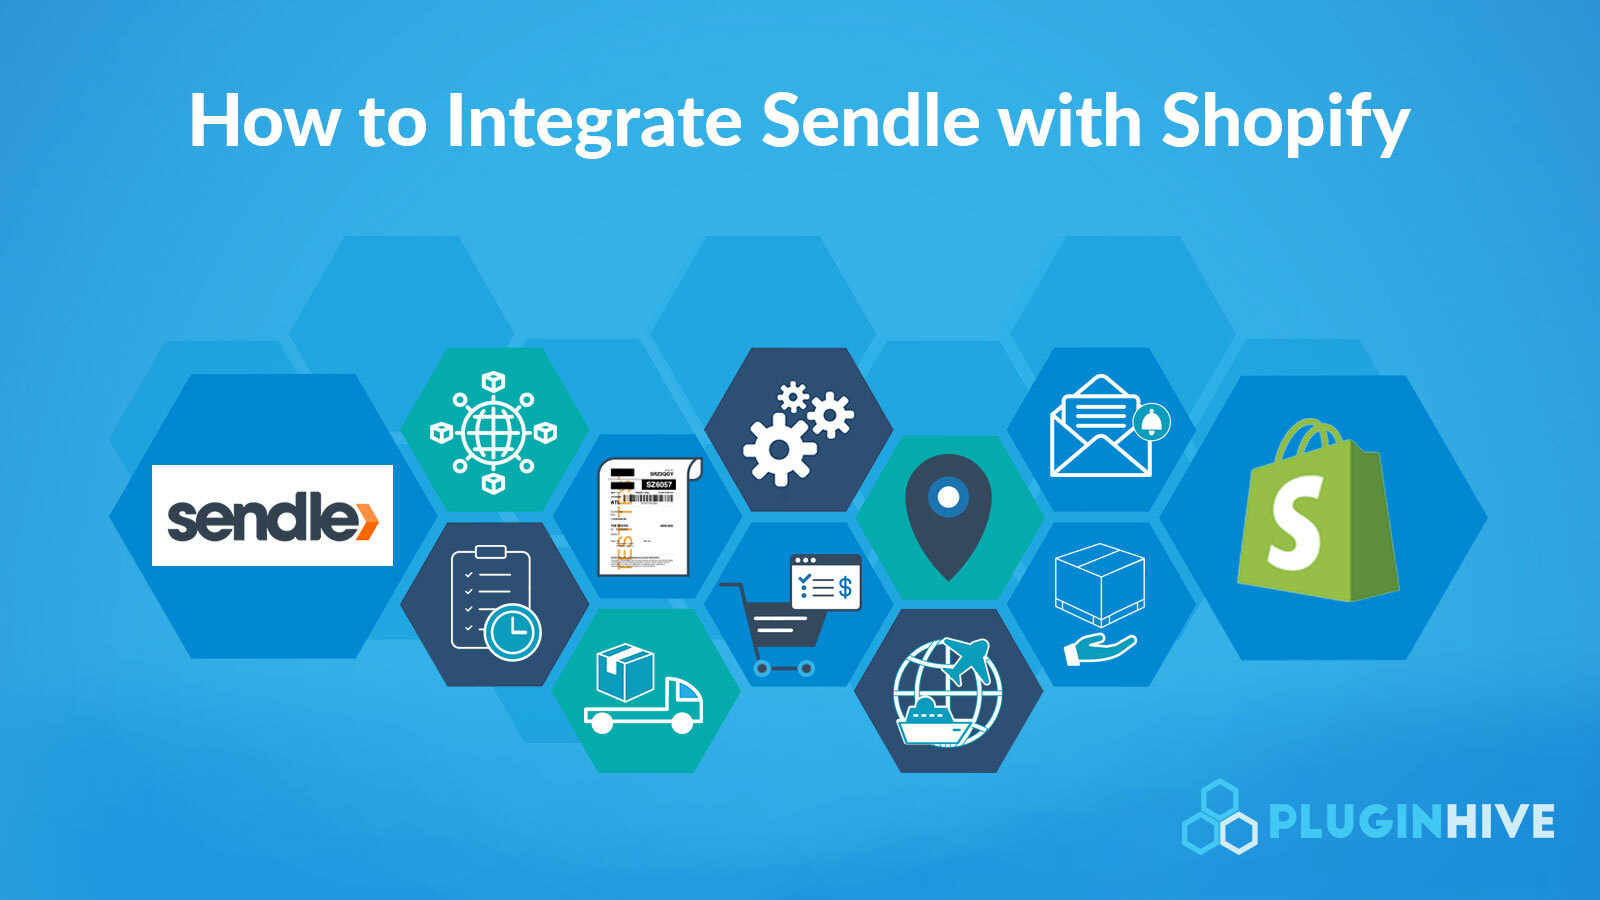 sendle-shopify-integration